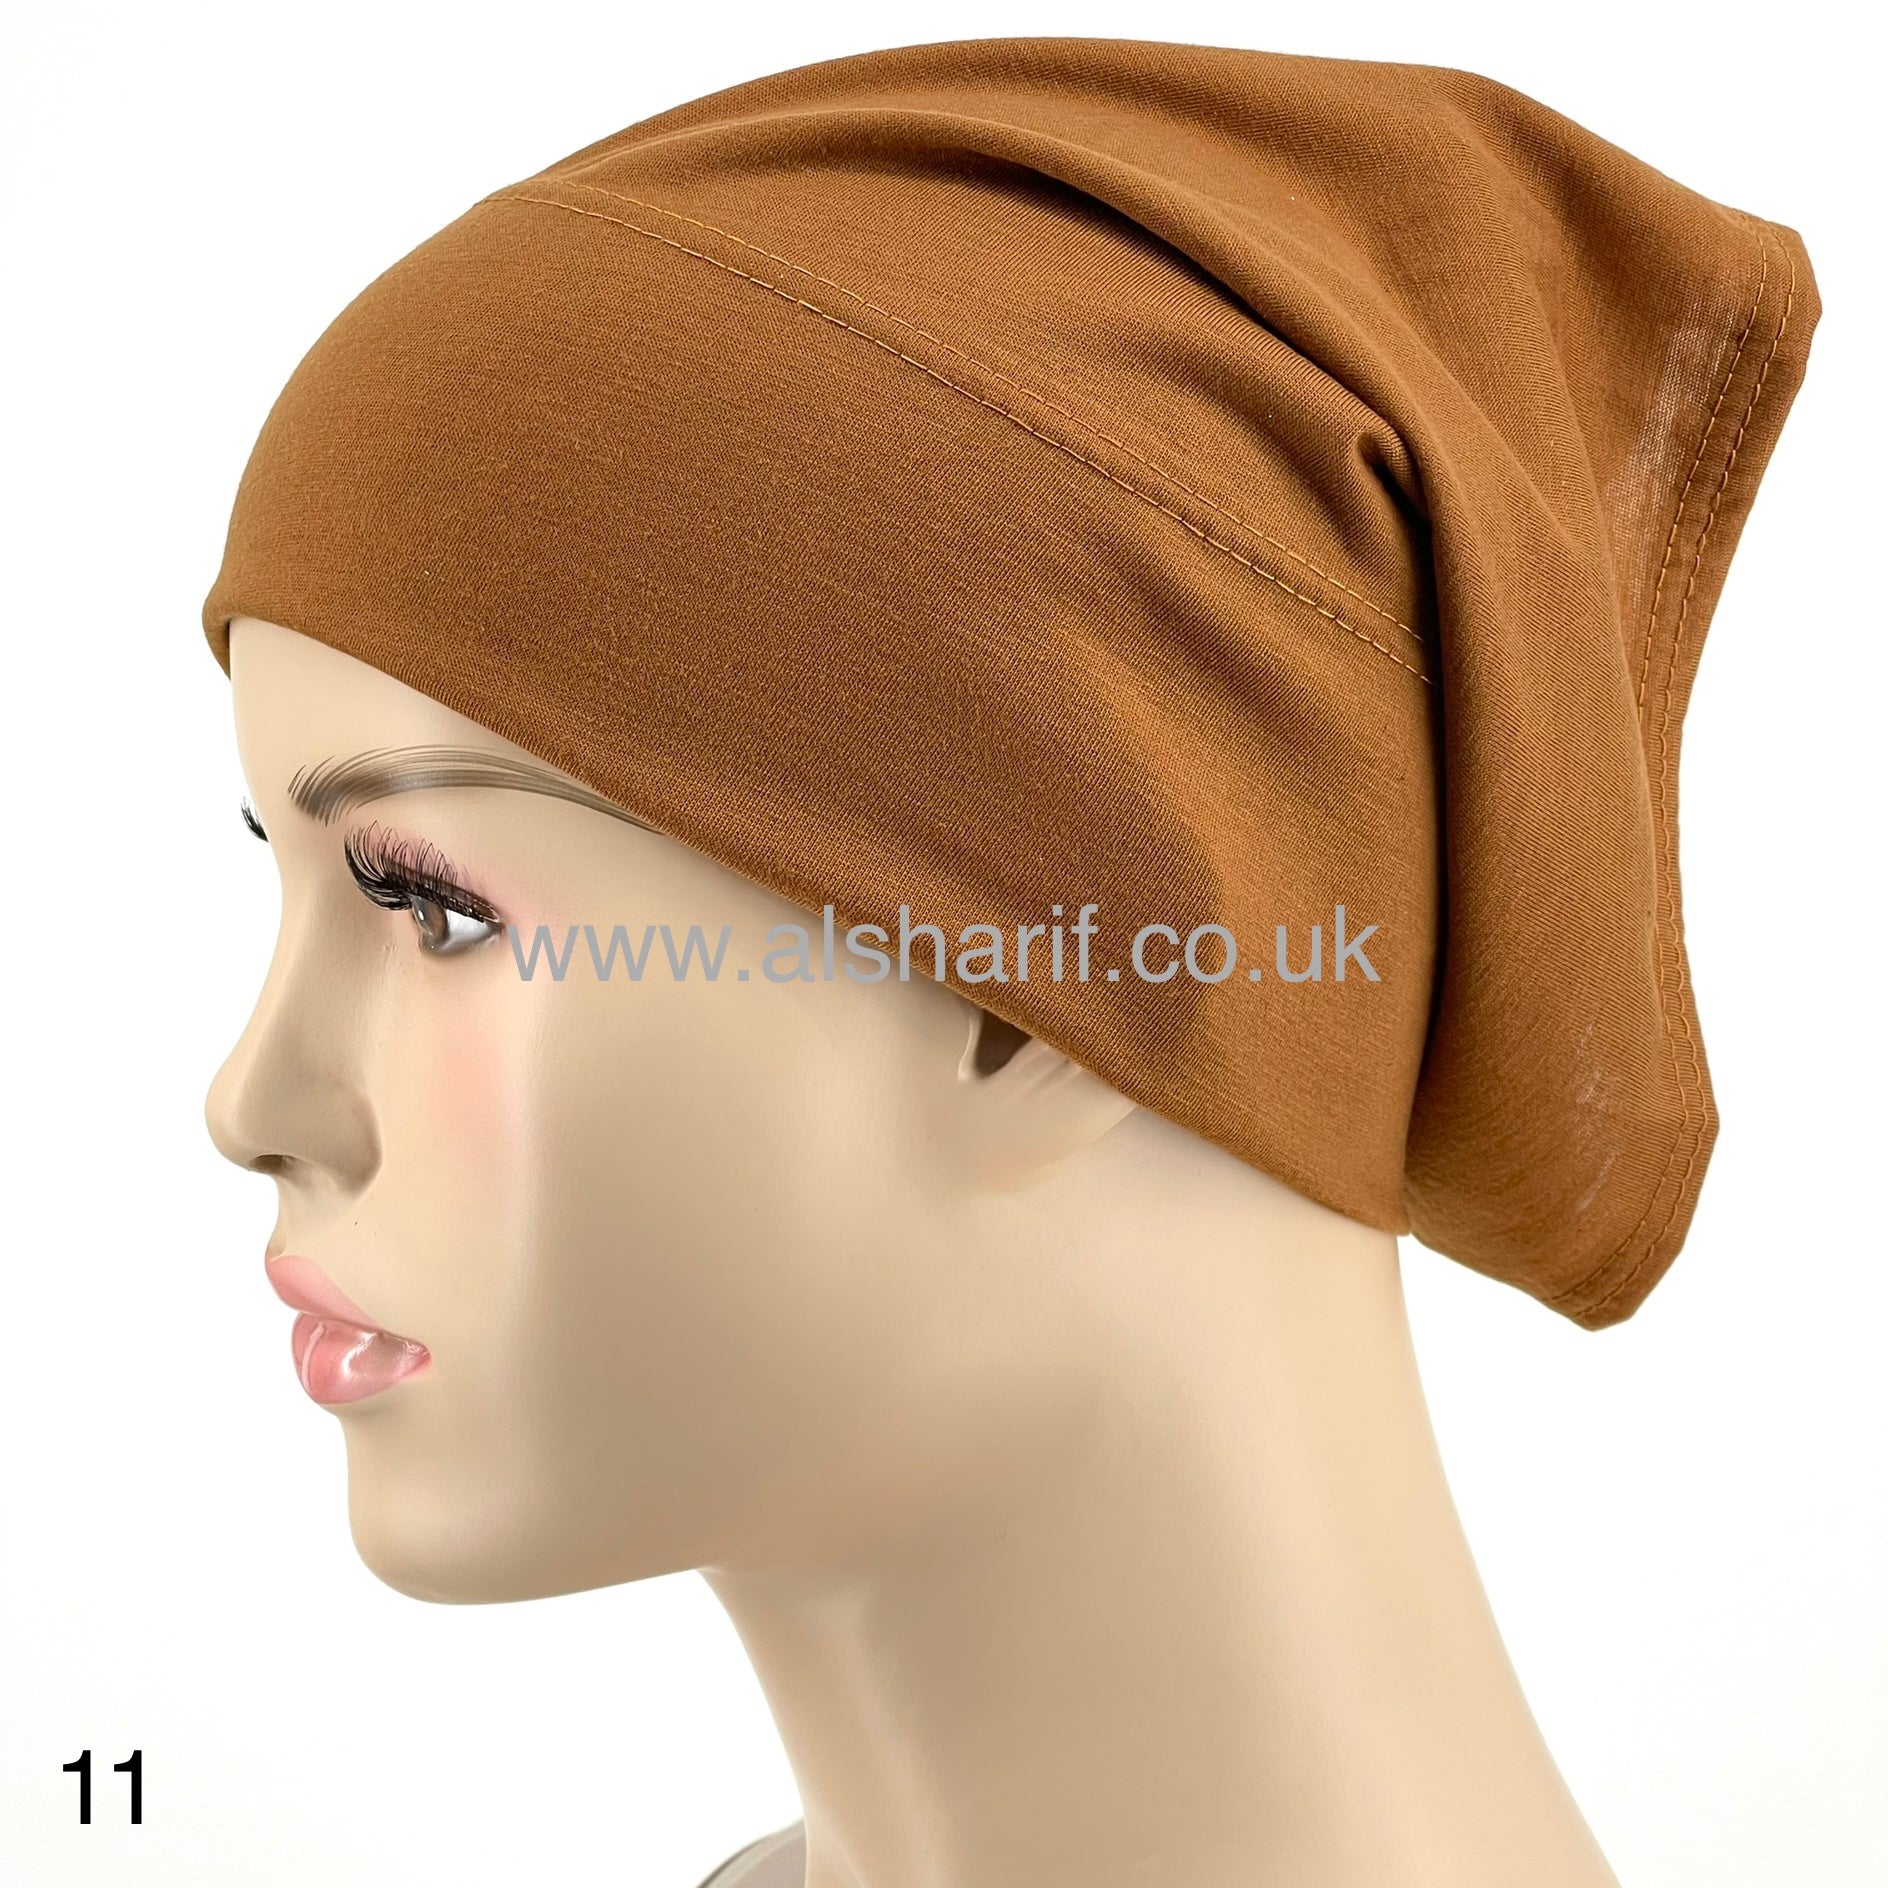 Under Hijab Tube Bonnet Cap #11